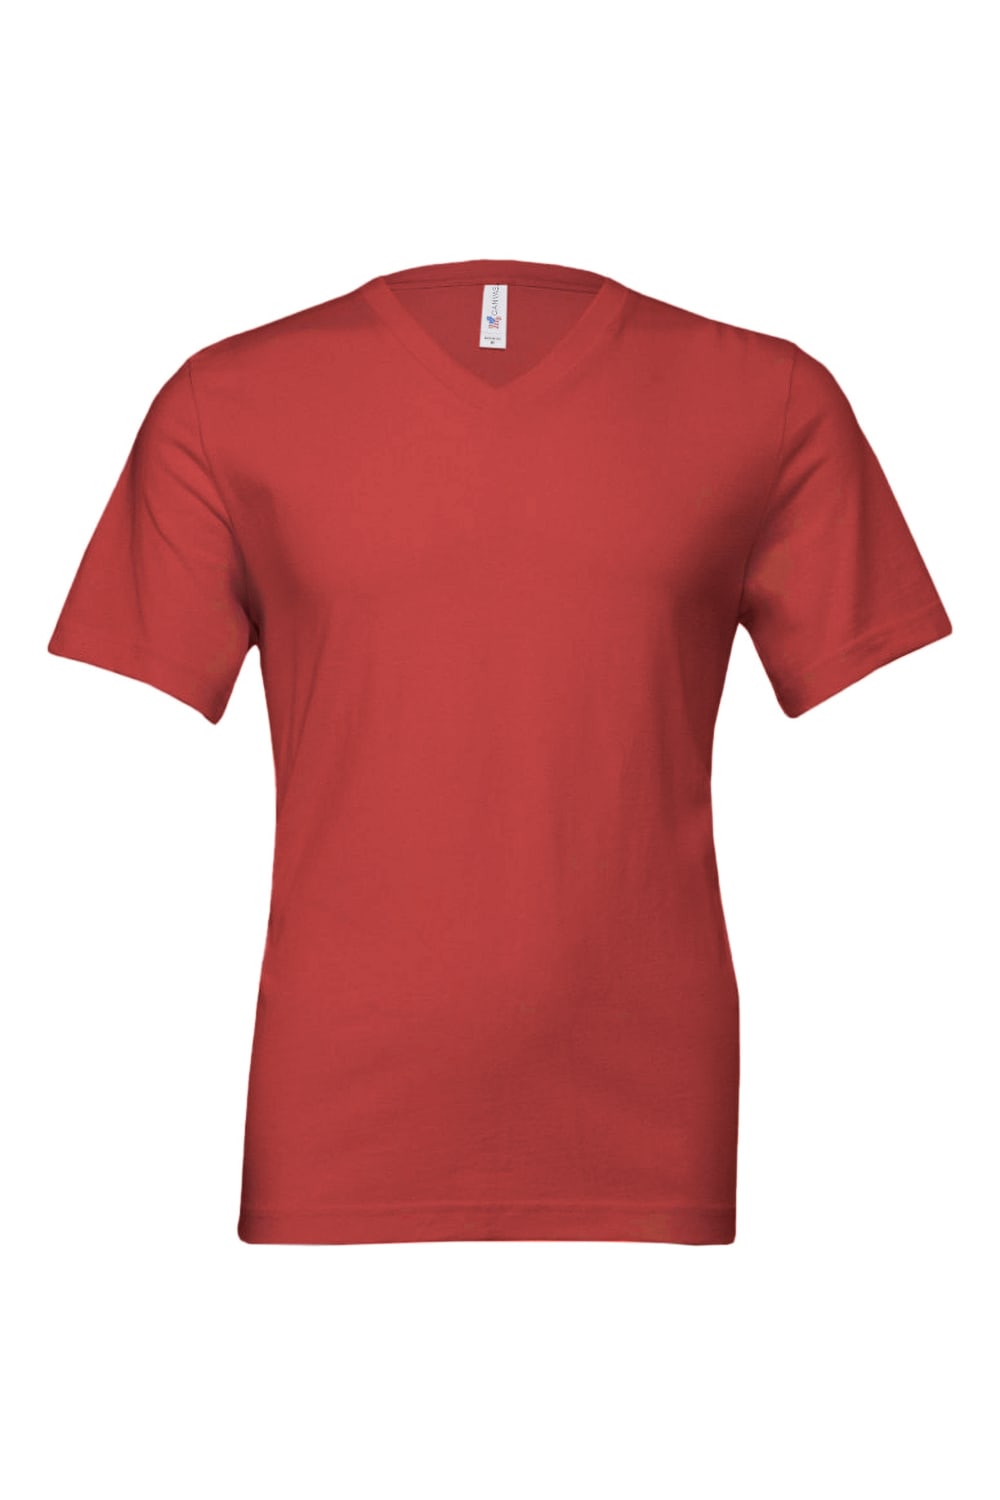 Canvas Mens Jersey Short Sleeve V-Neck T-Shirt (Red)